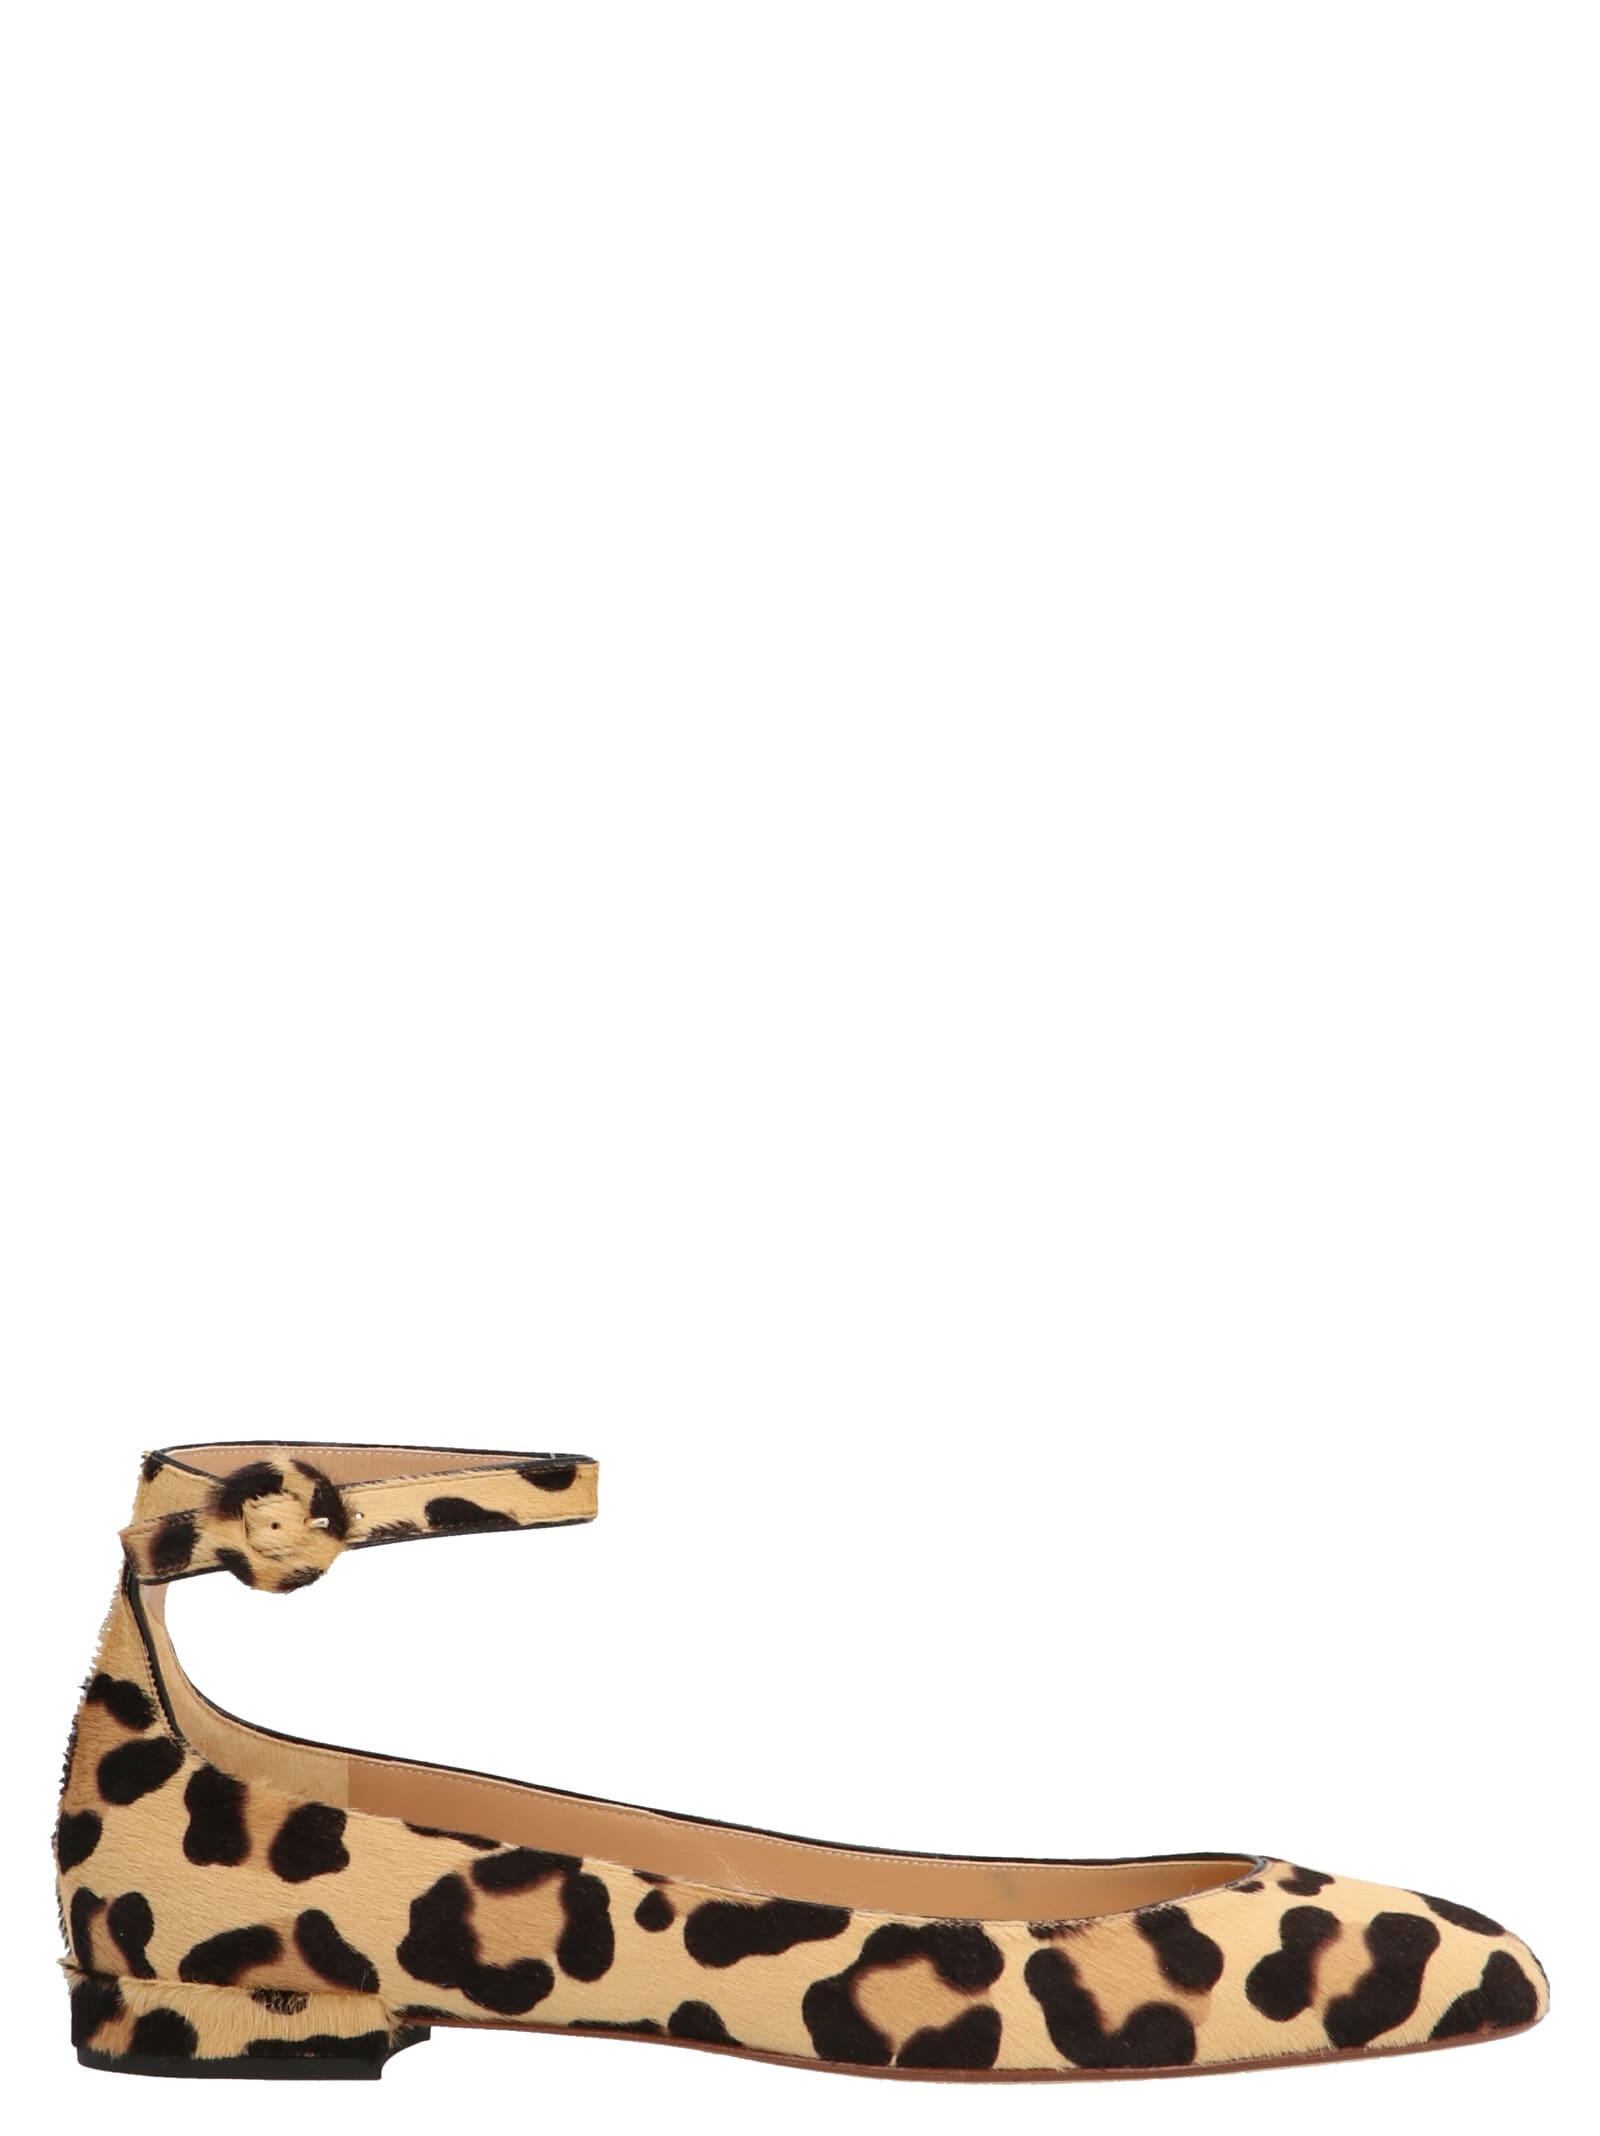 Buy Francesco Russo leopard Shoes online, shop Francesco Russo shoes with free shipping